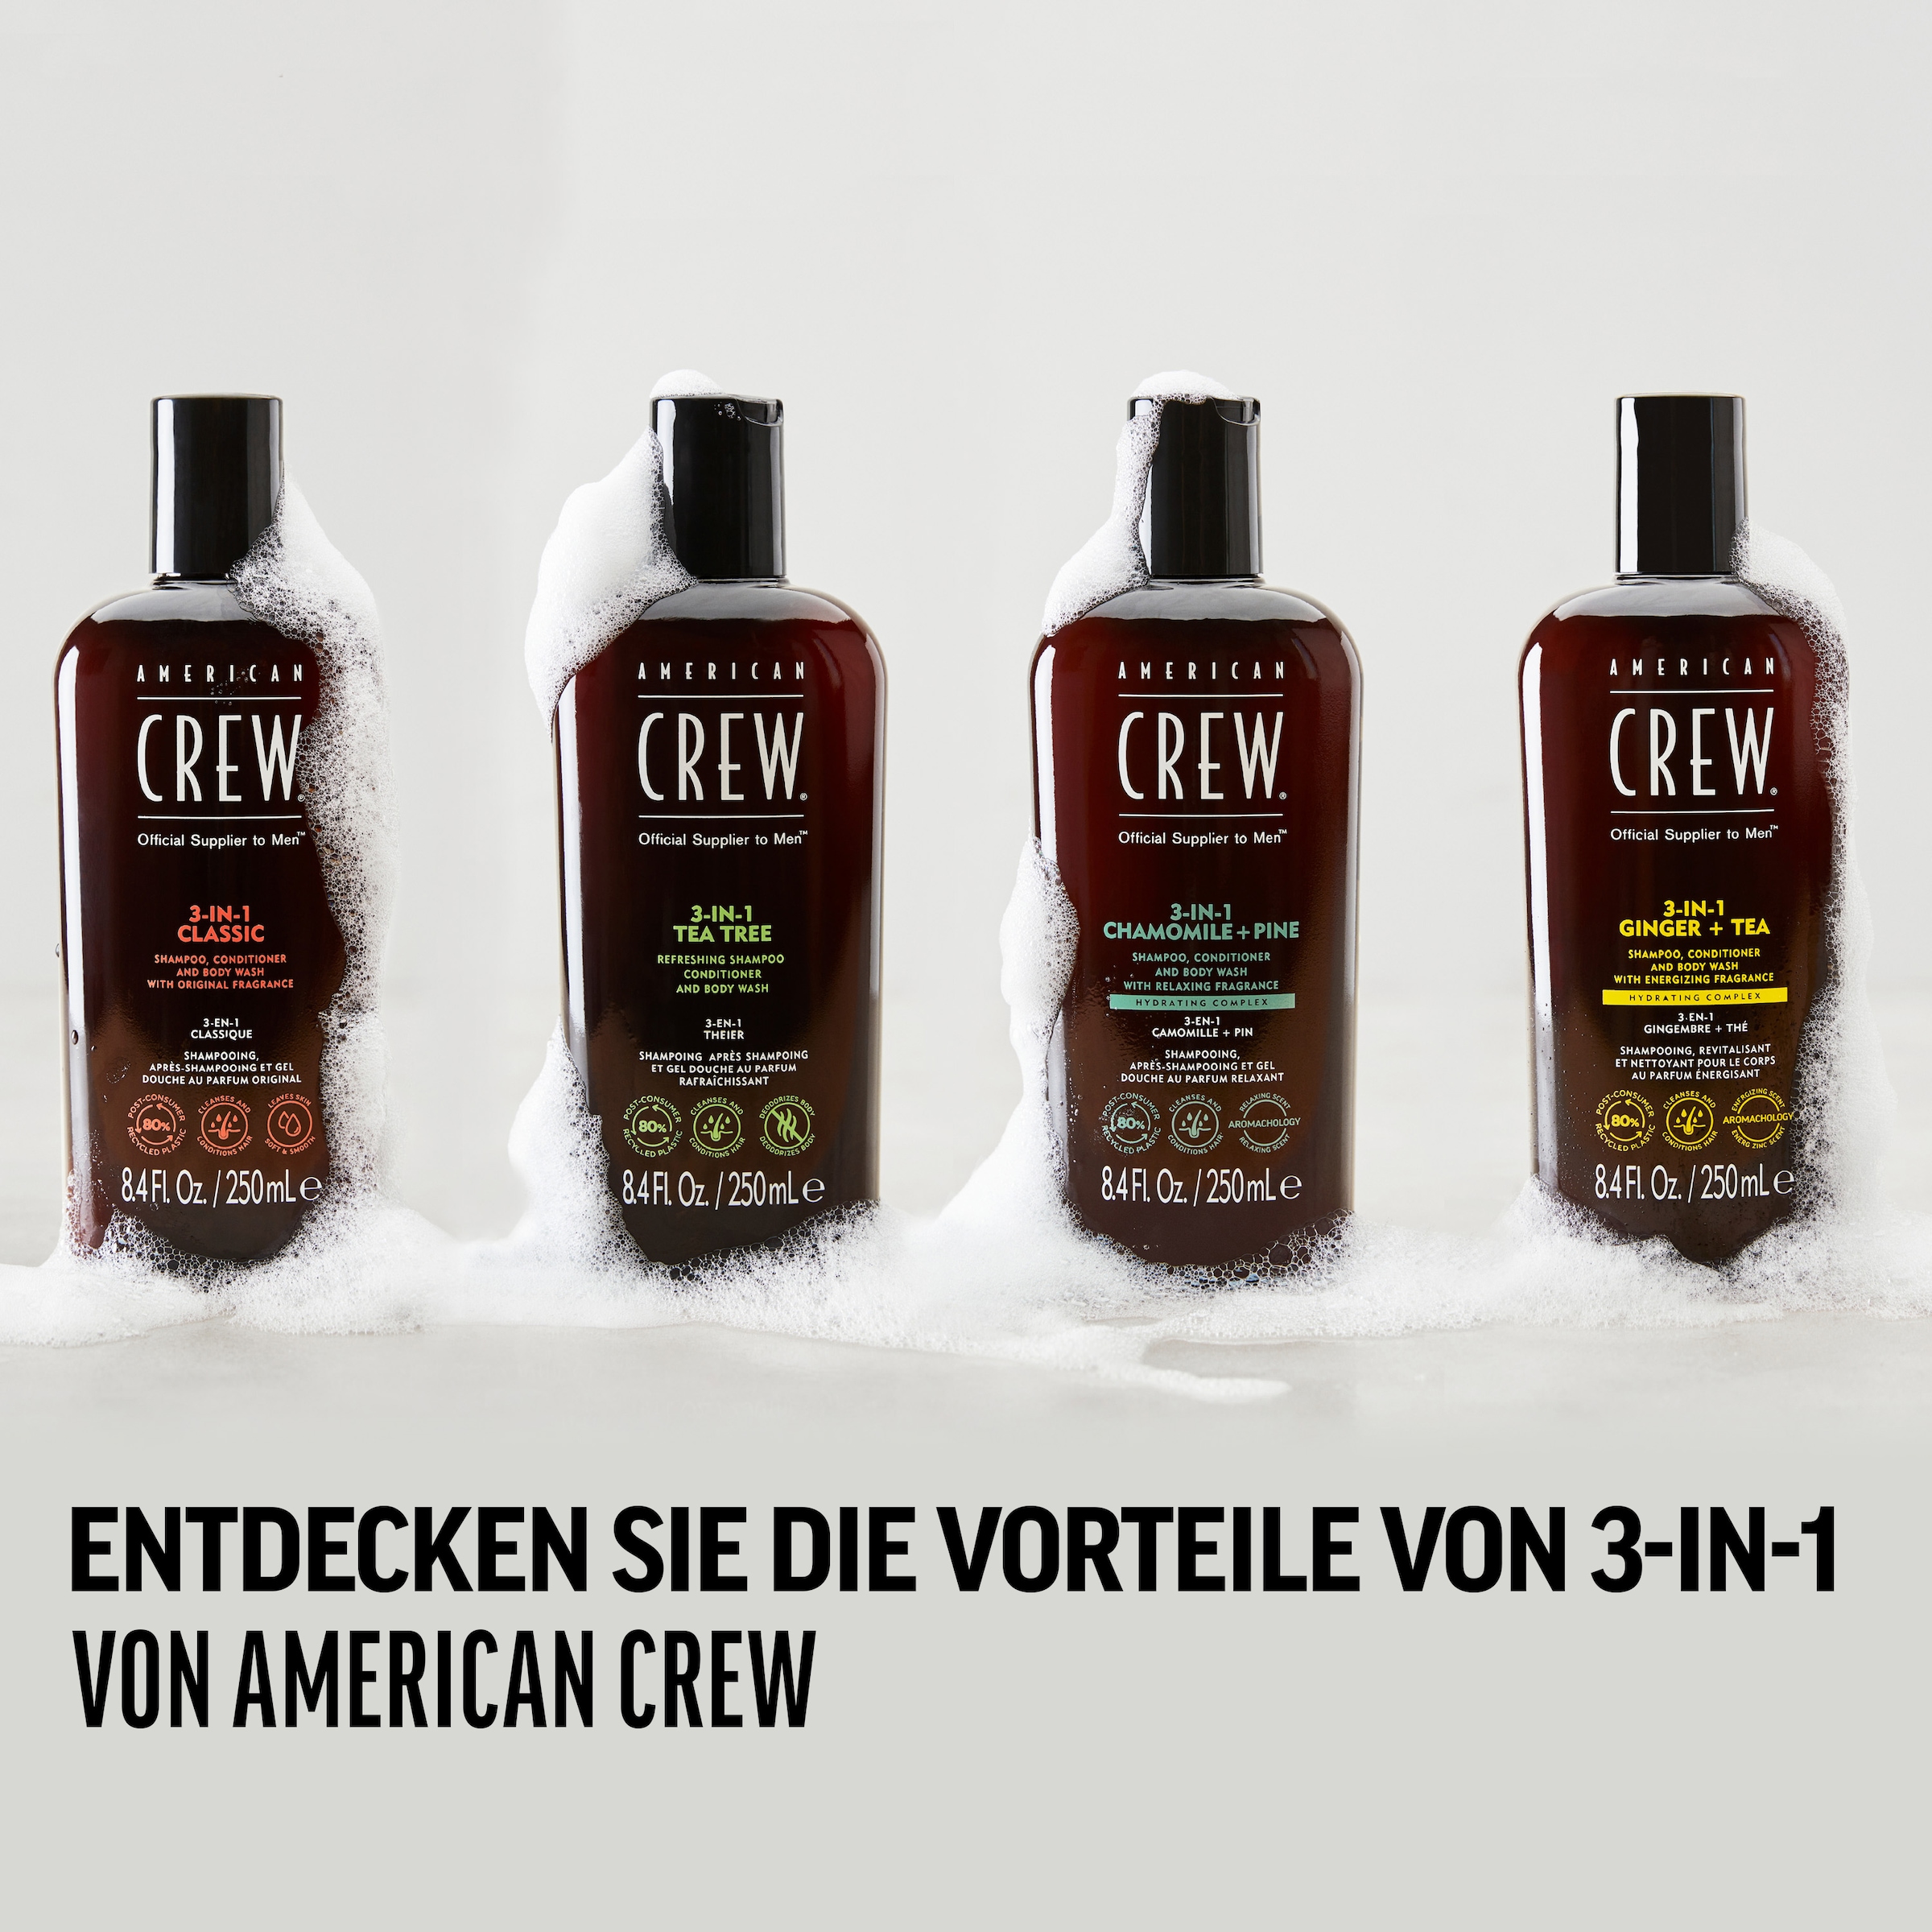 American Crew Haarshampoo »3In1 Classic Shampoo, Conditioner & Body Wash 250 ml«, (1 tlg.)